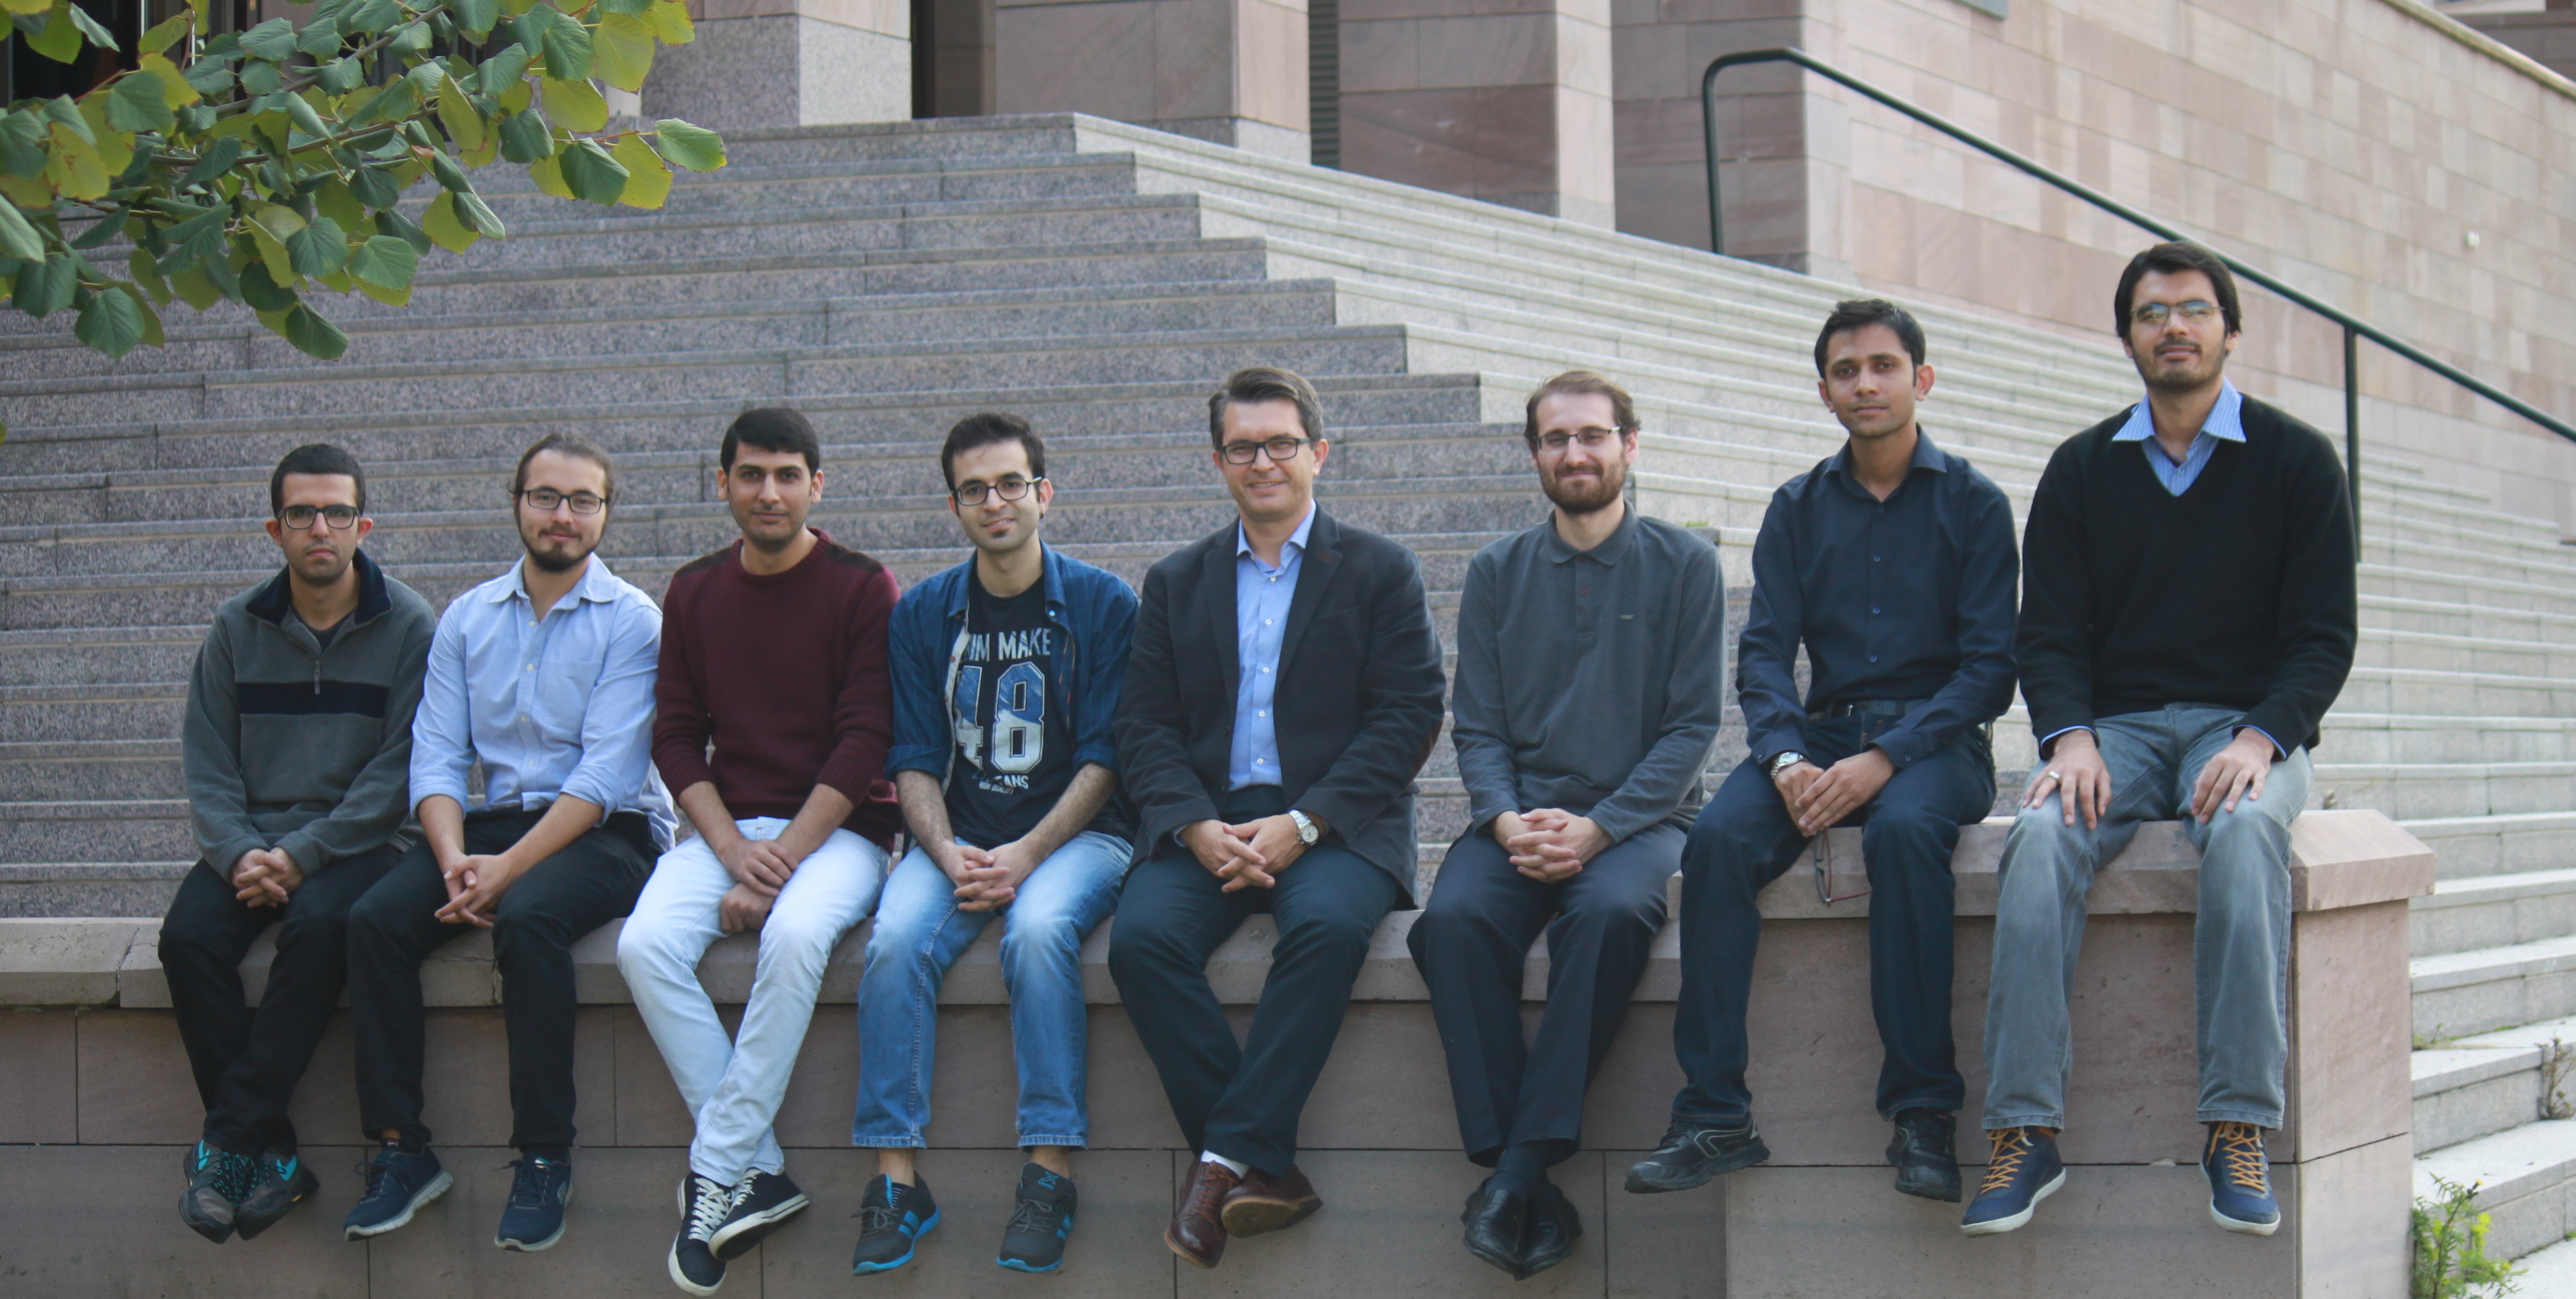 27 Oct. 2015, (from left to right) Mustafa Eryürek, Ayşenur Ateş, Suman Anand, Alper Kiraz, Adil Mustafa, M. Waqas Nawaz, M. Zeeshan Rashid